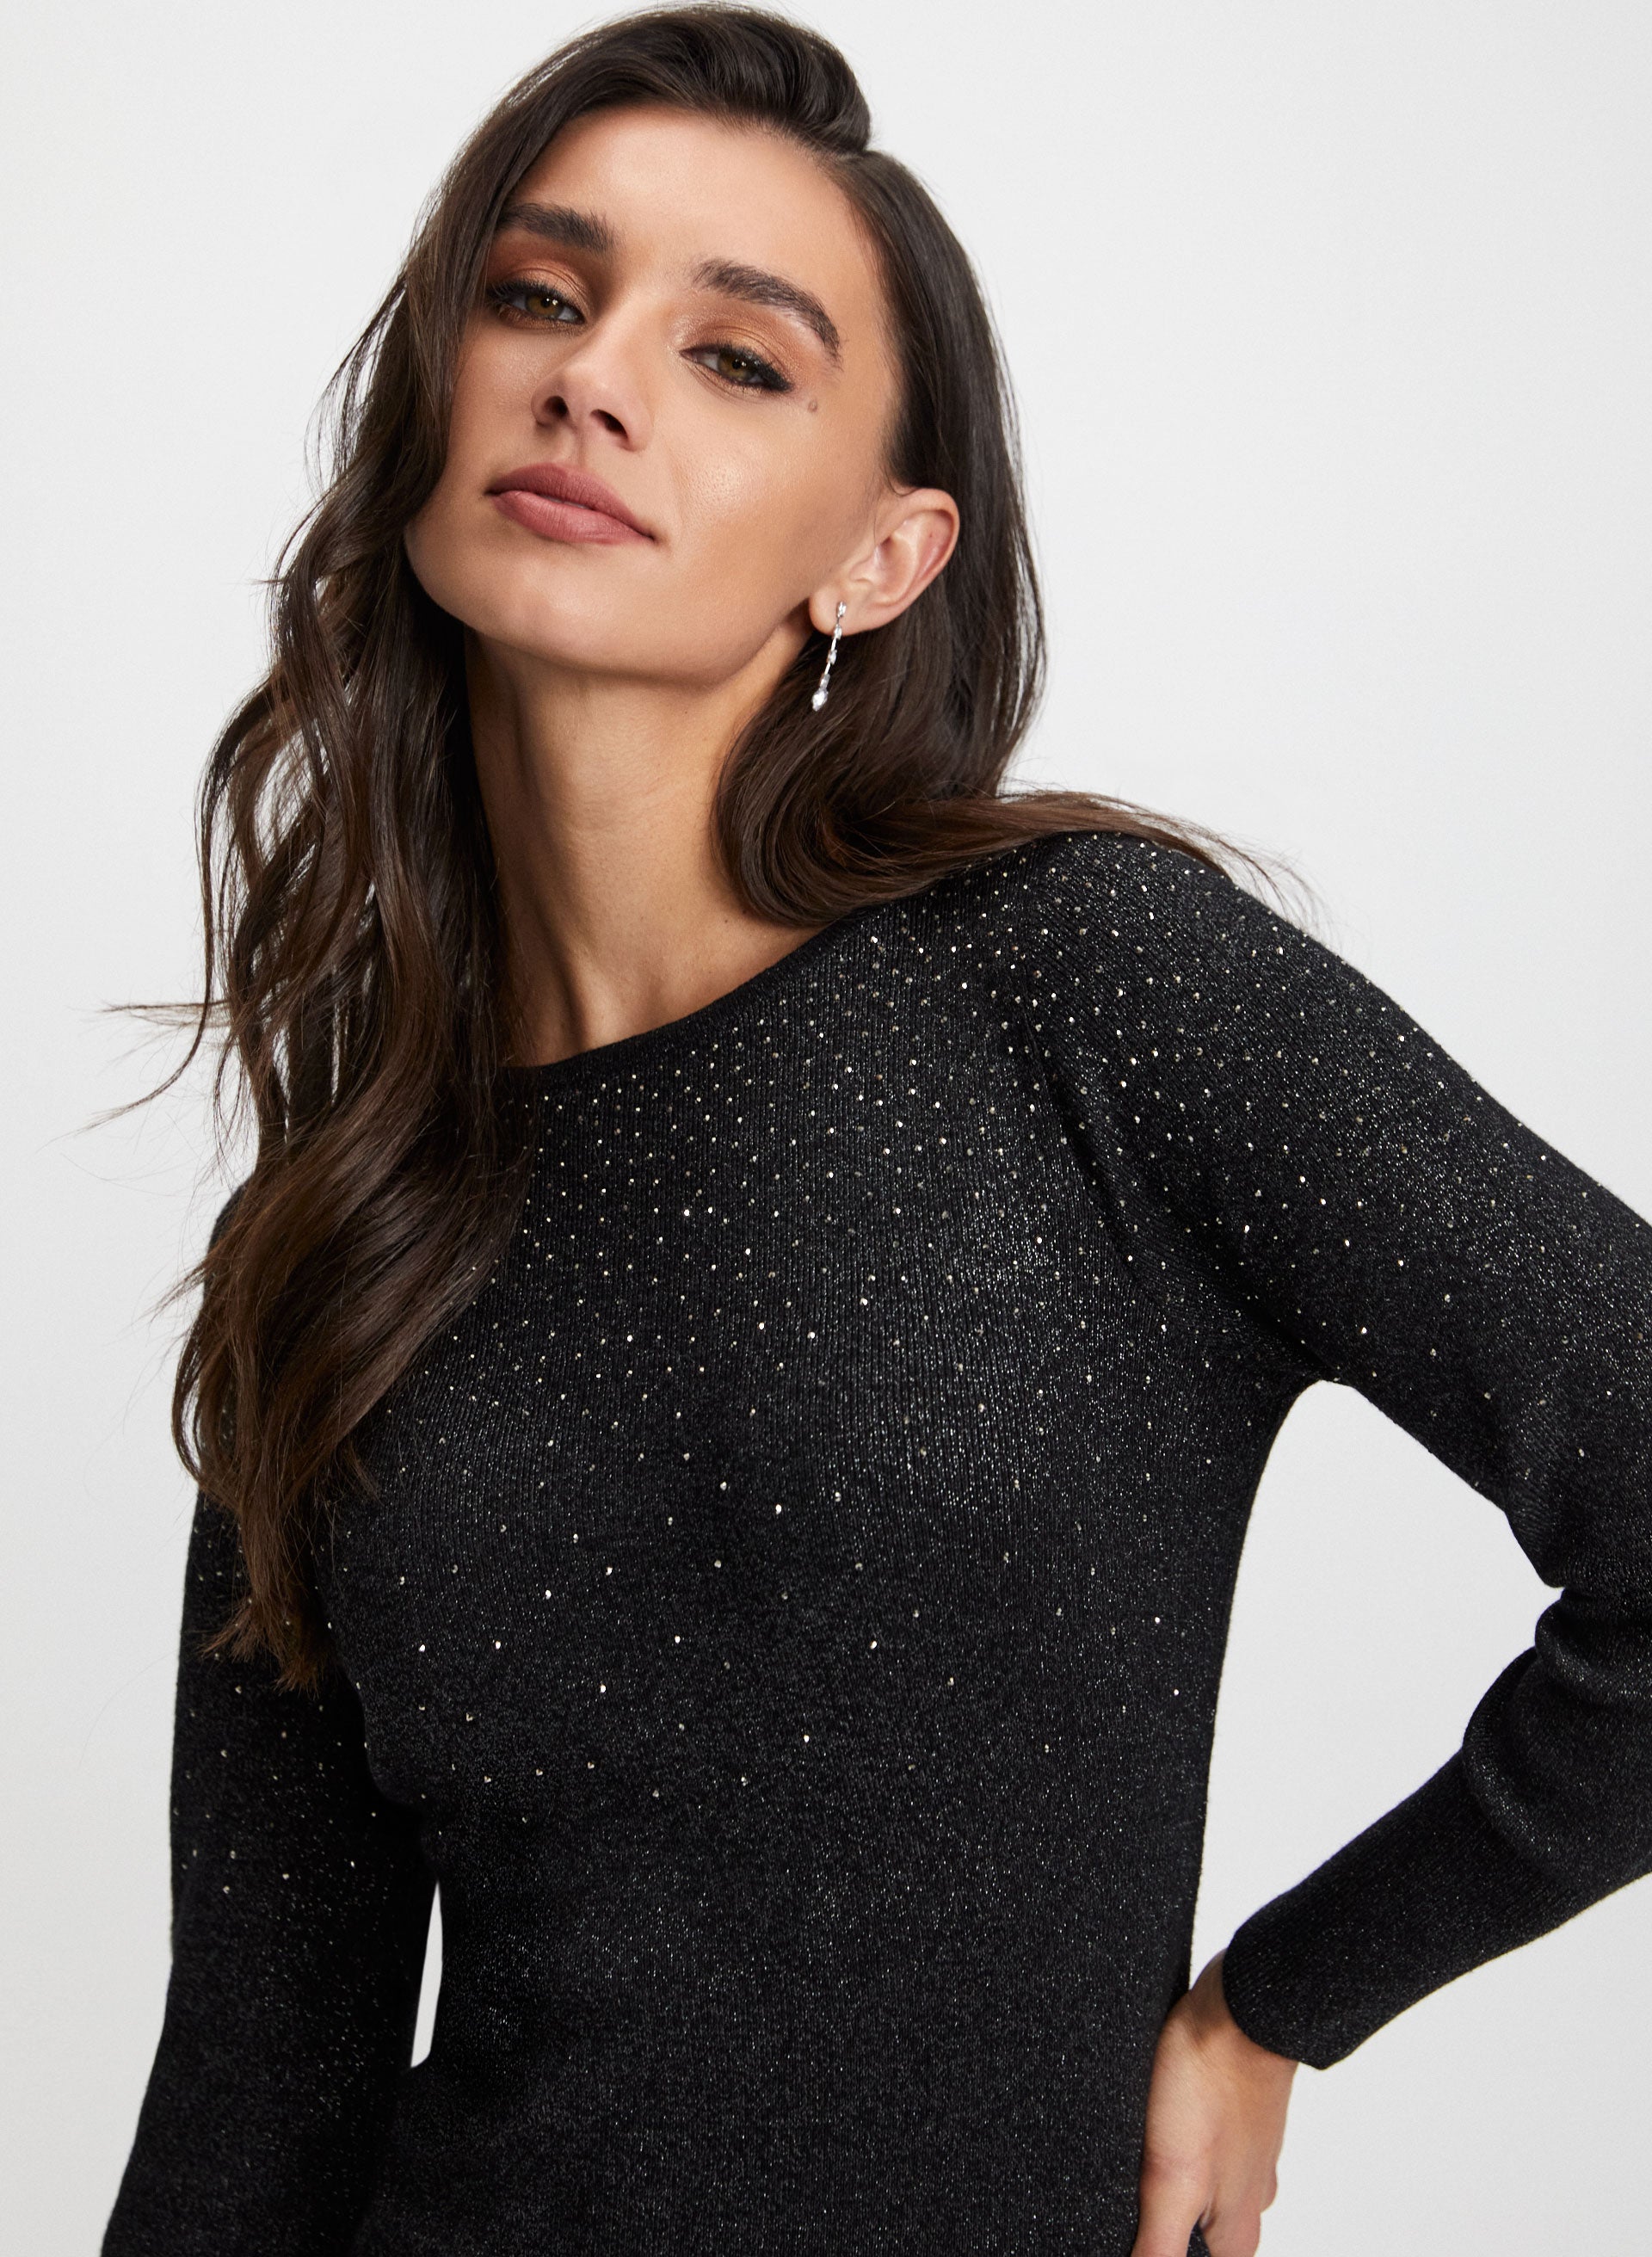 R&K Originals Petites Women's Black Sweater Dress - Size PL - NWT $60 